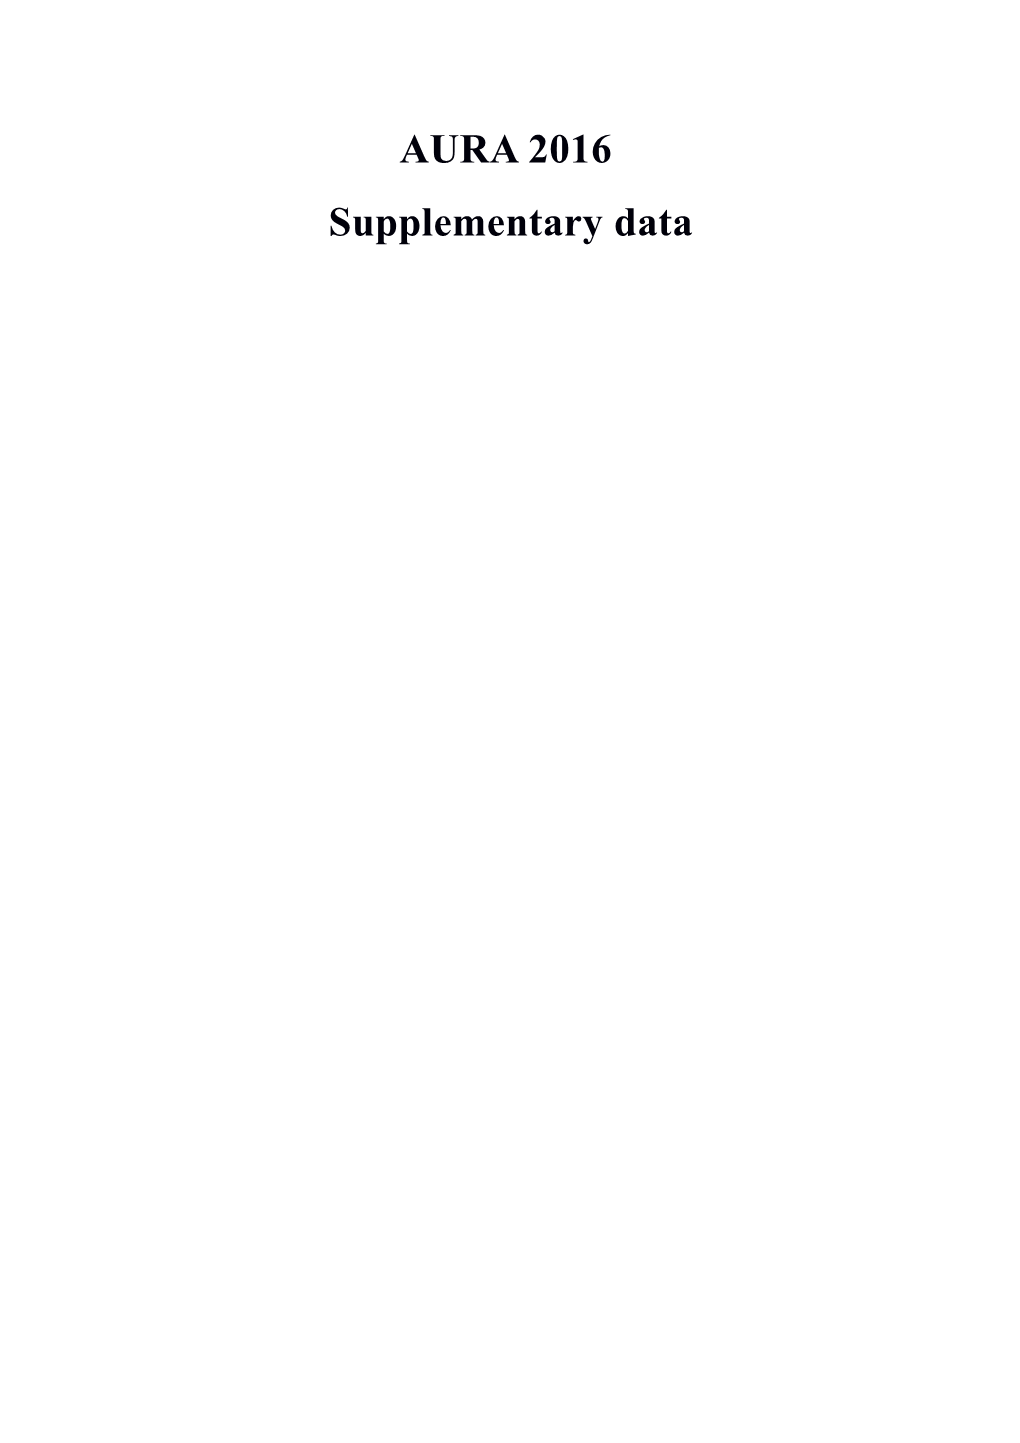 AURA 2016: Supplementary Data